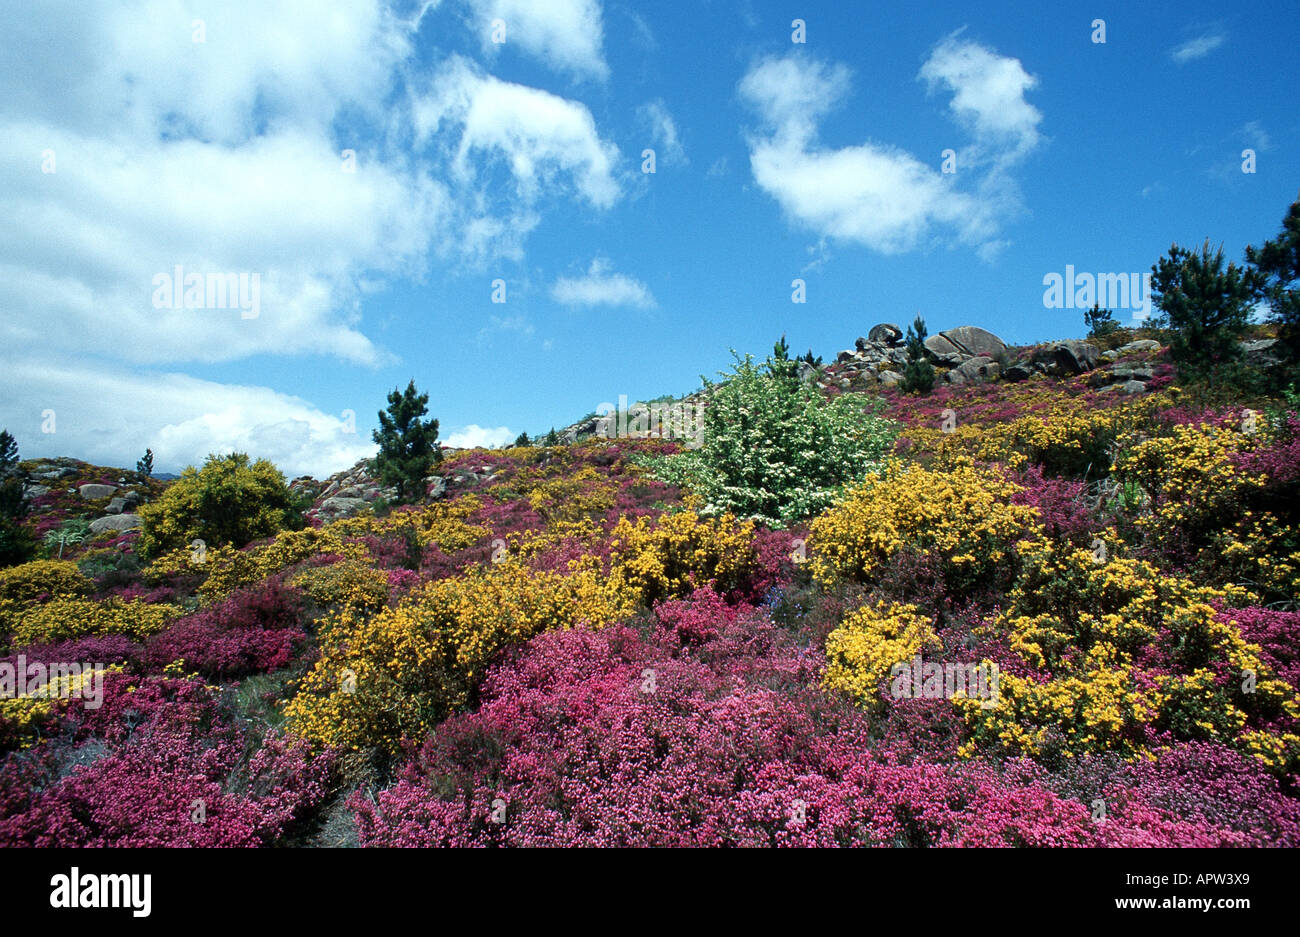 heath with flowering shrubs, Portugal, Nationalpark Peneda Geres Stock Photo